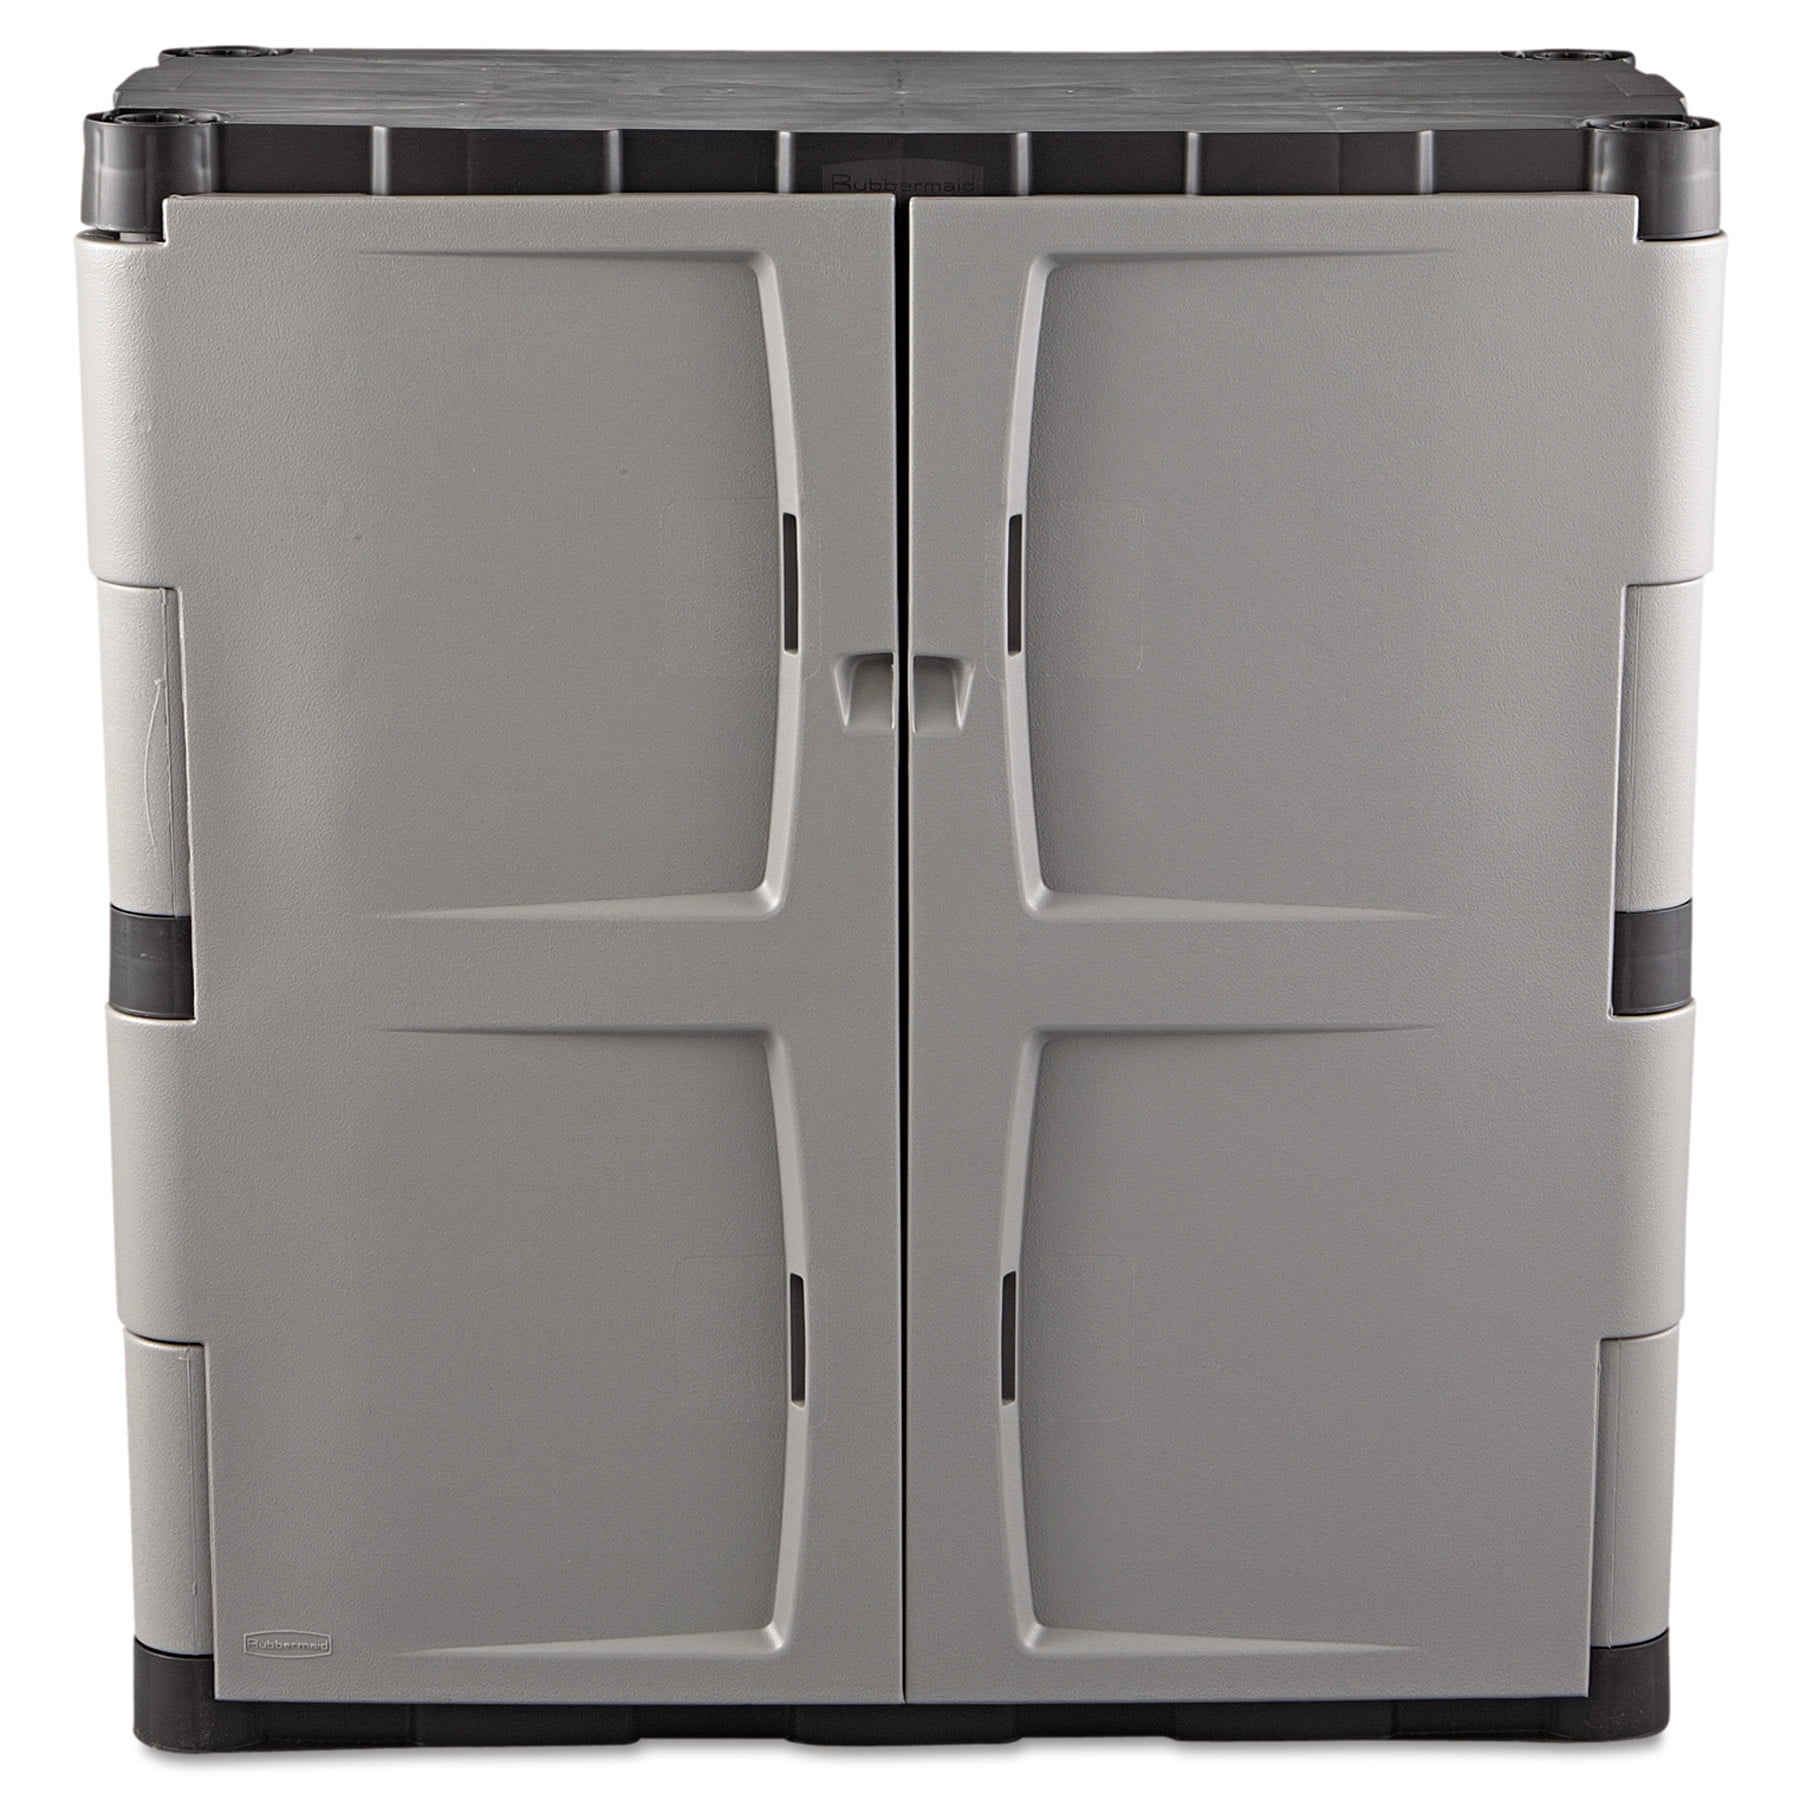 Rubbermaid 7085 Plastic Storage Cabinet Base Double Door 36W x 18D x 37H